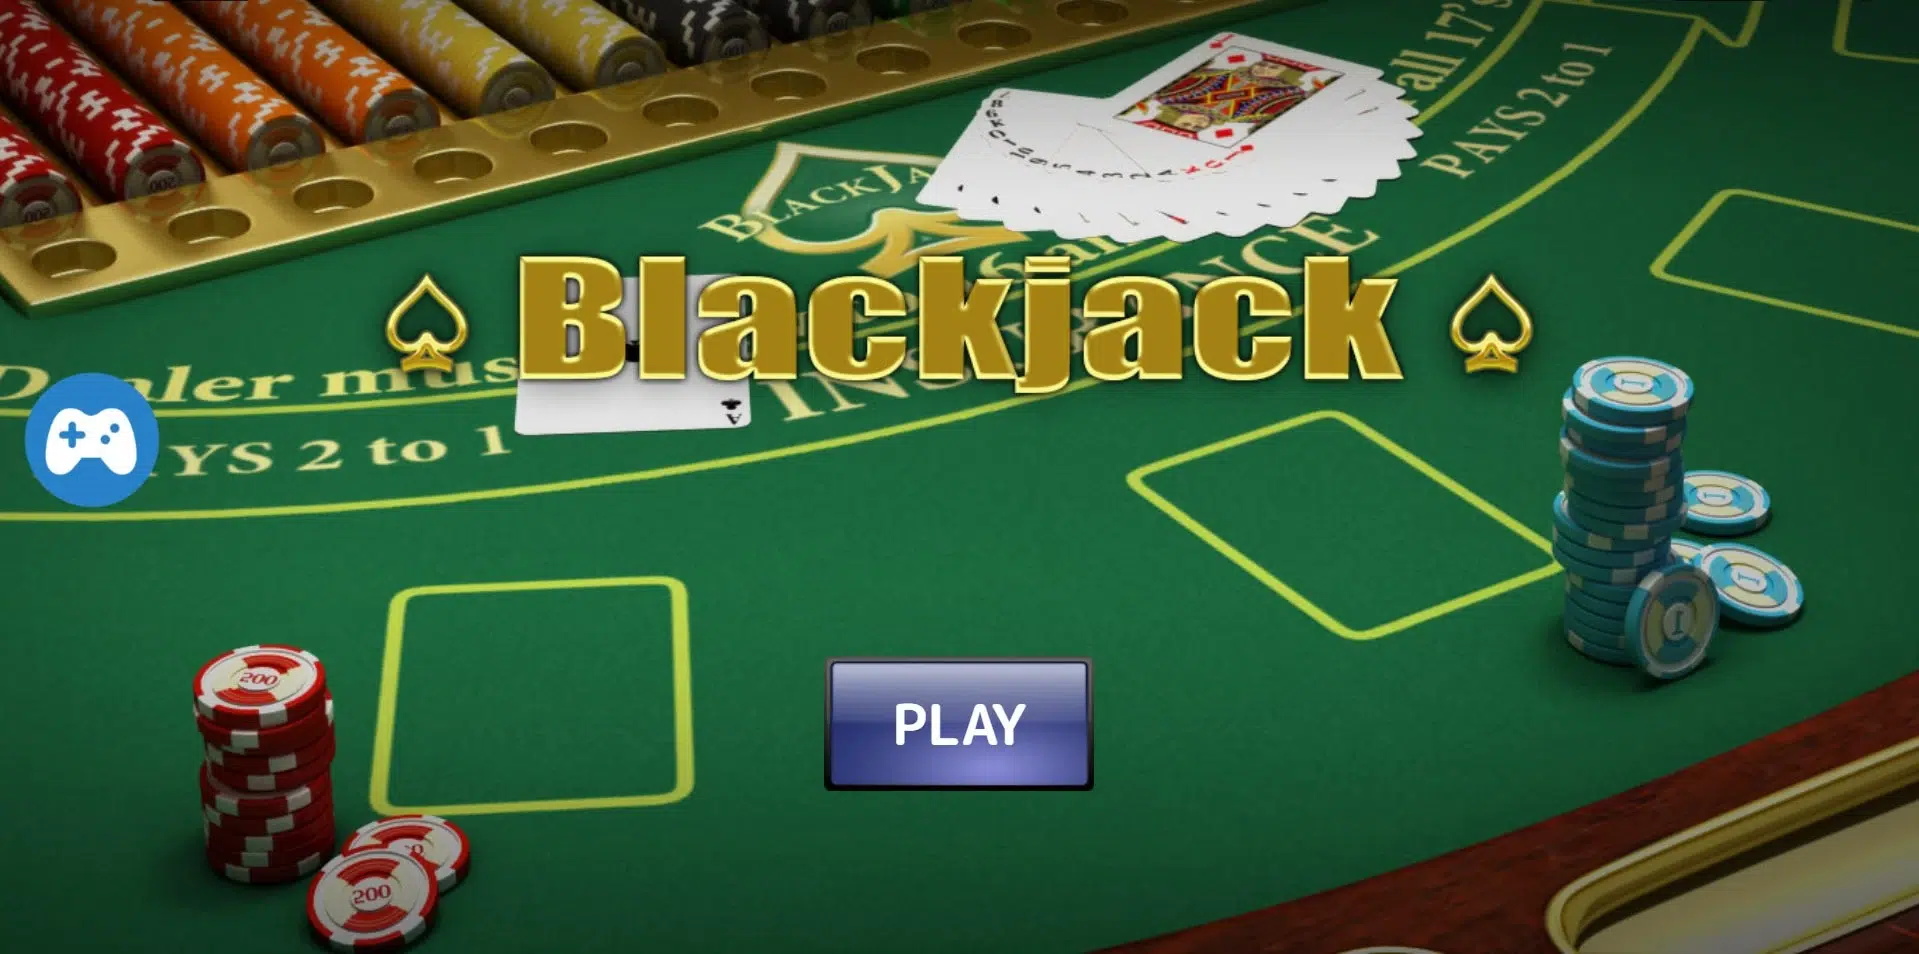 Blackjack Rs8